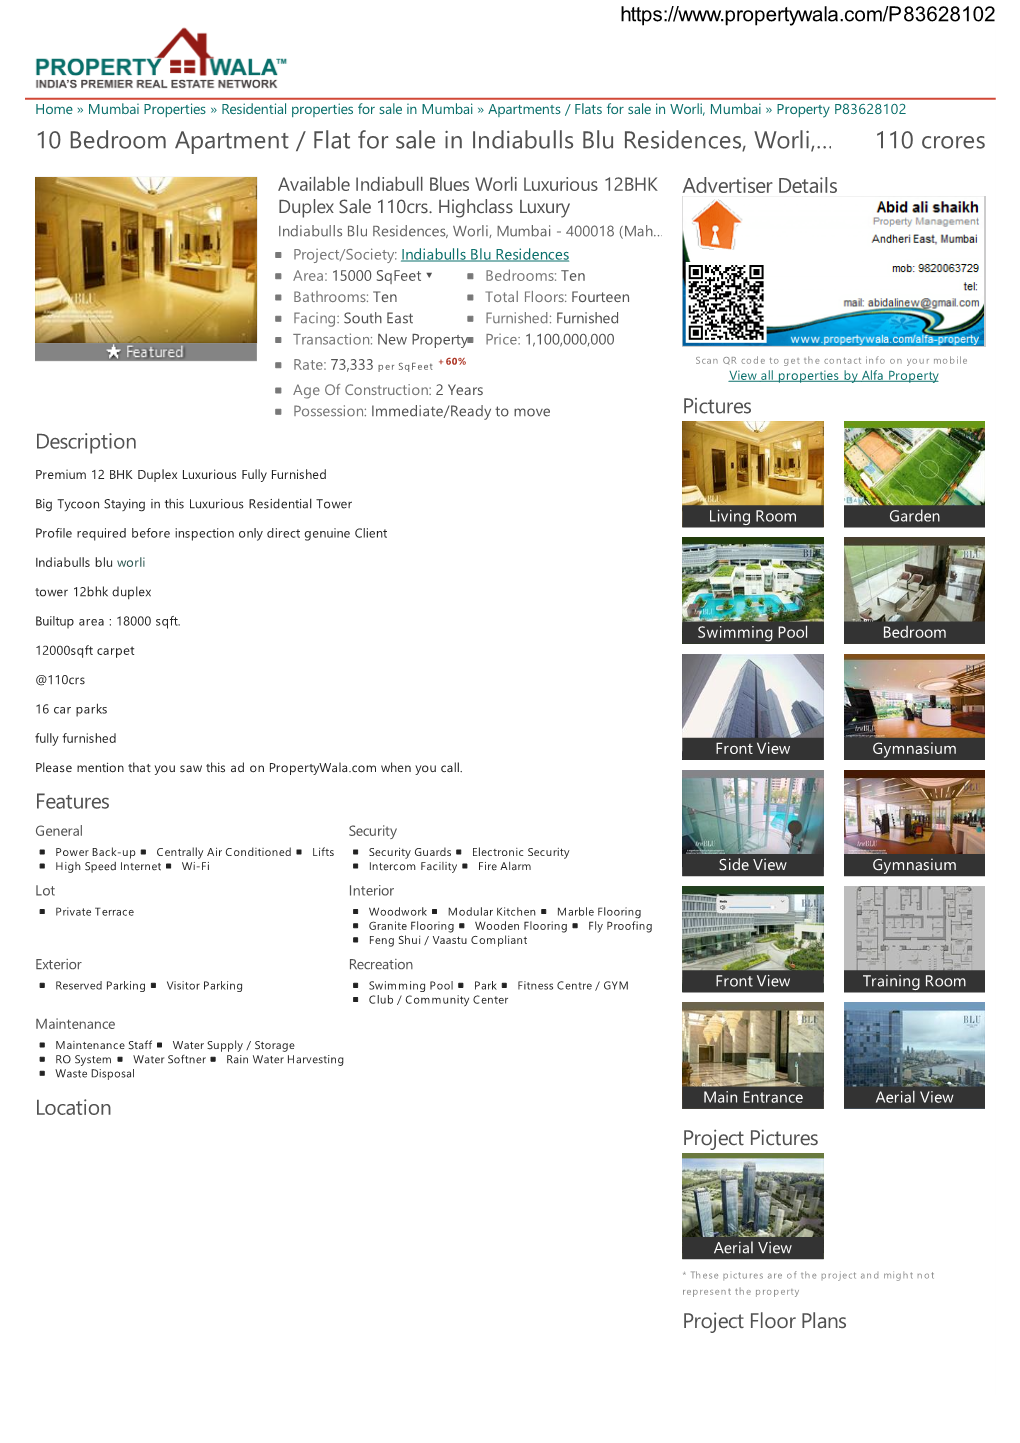 10 Bedroom Apartment / Flat for Sale in Indiabulls Blu Residences, Worli